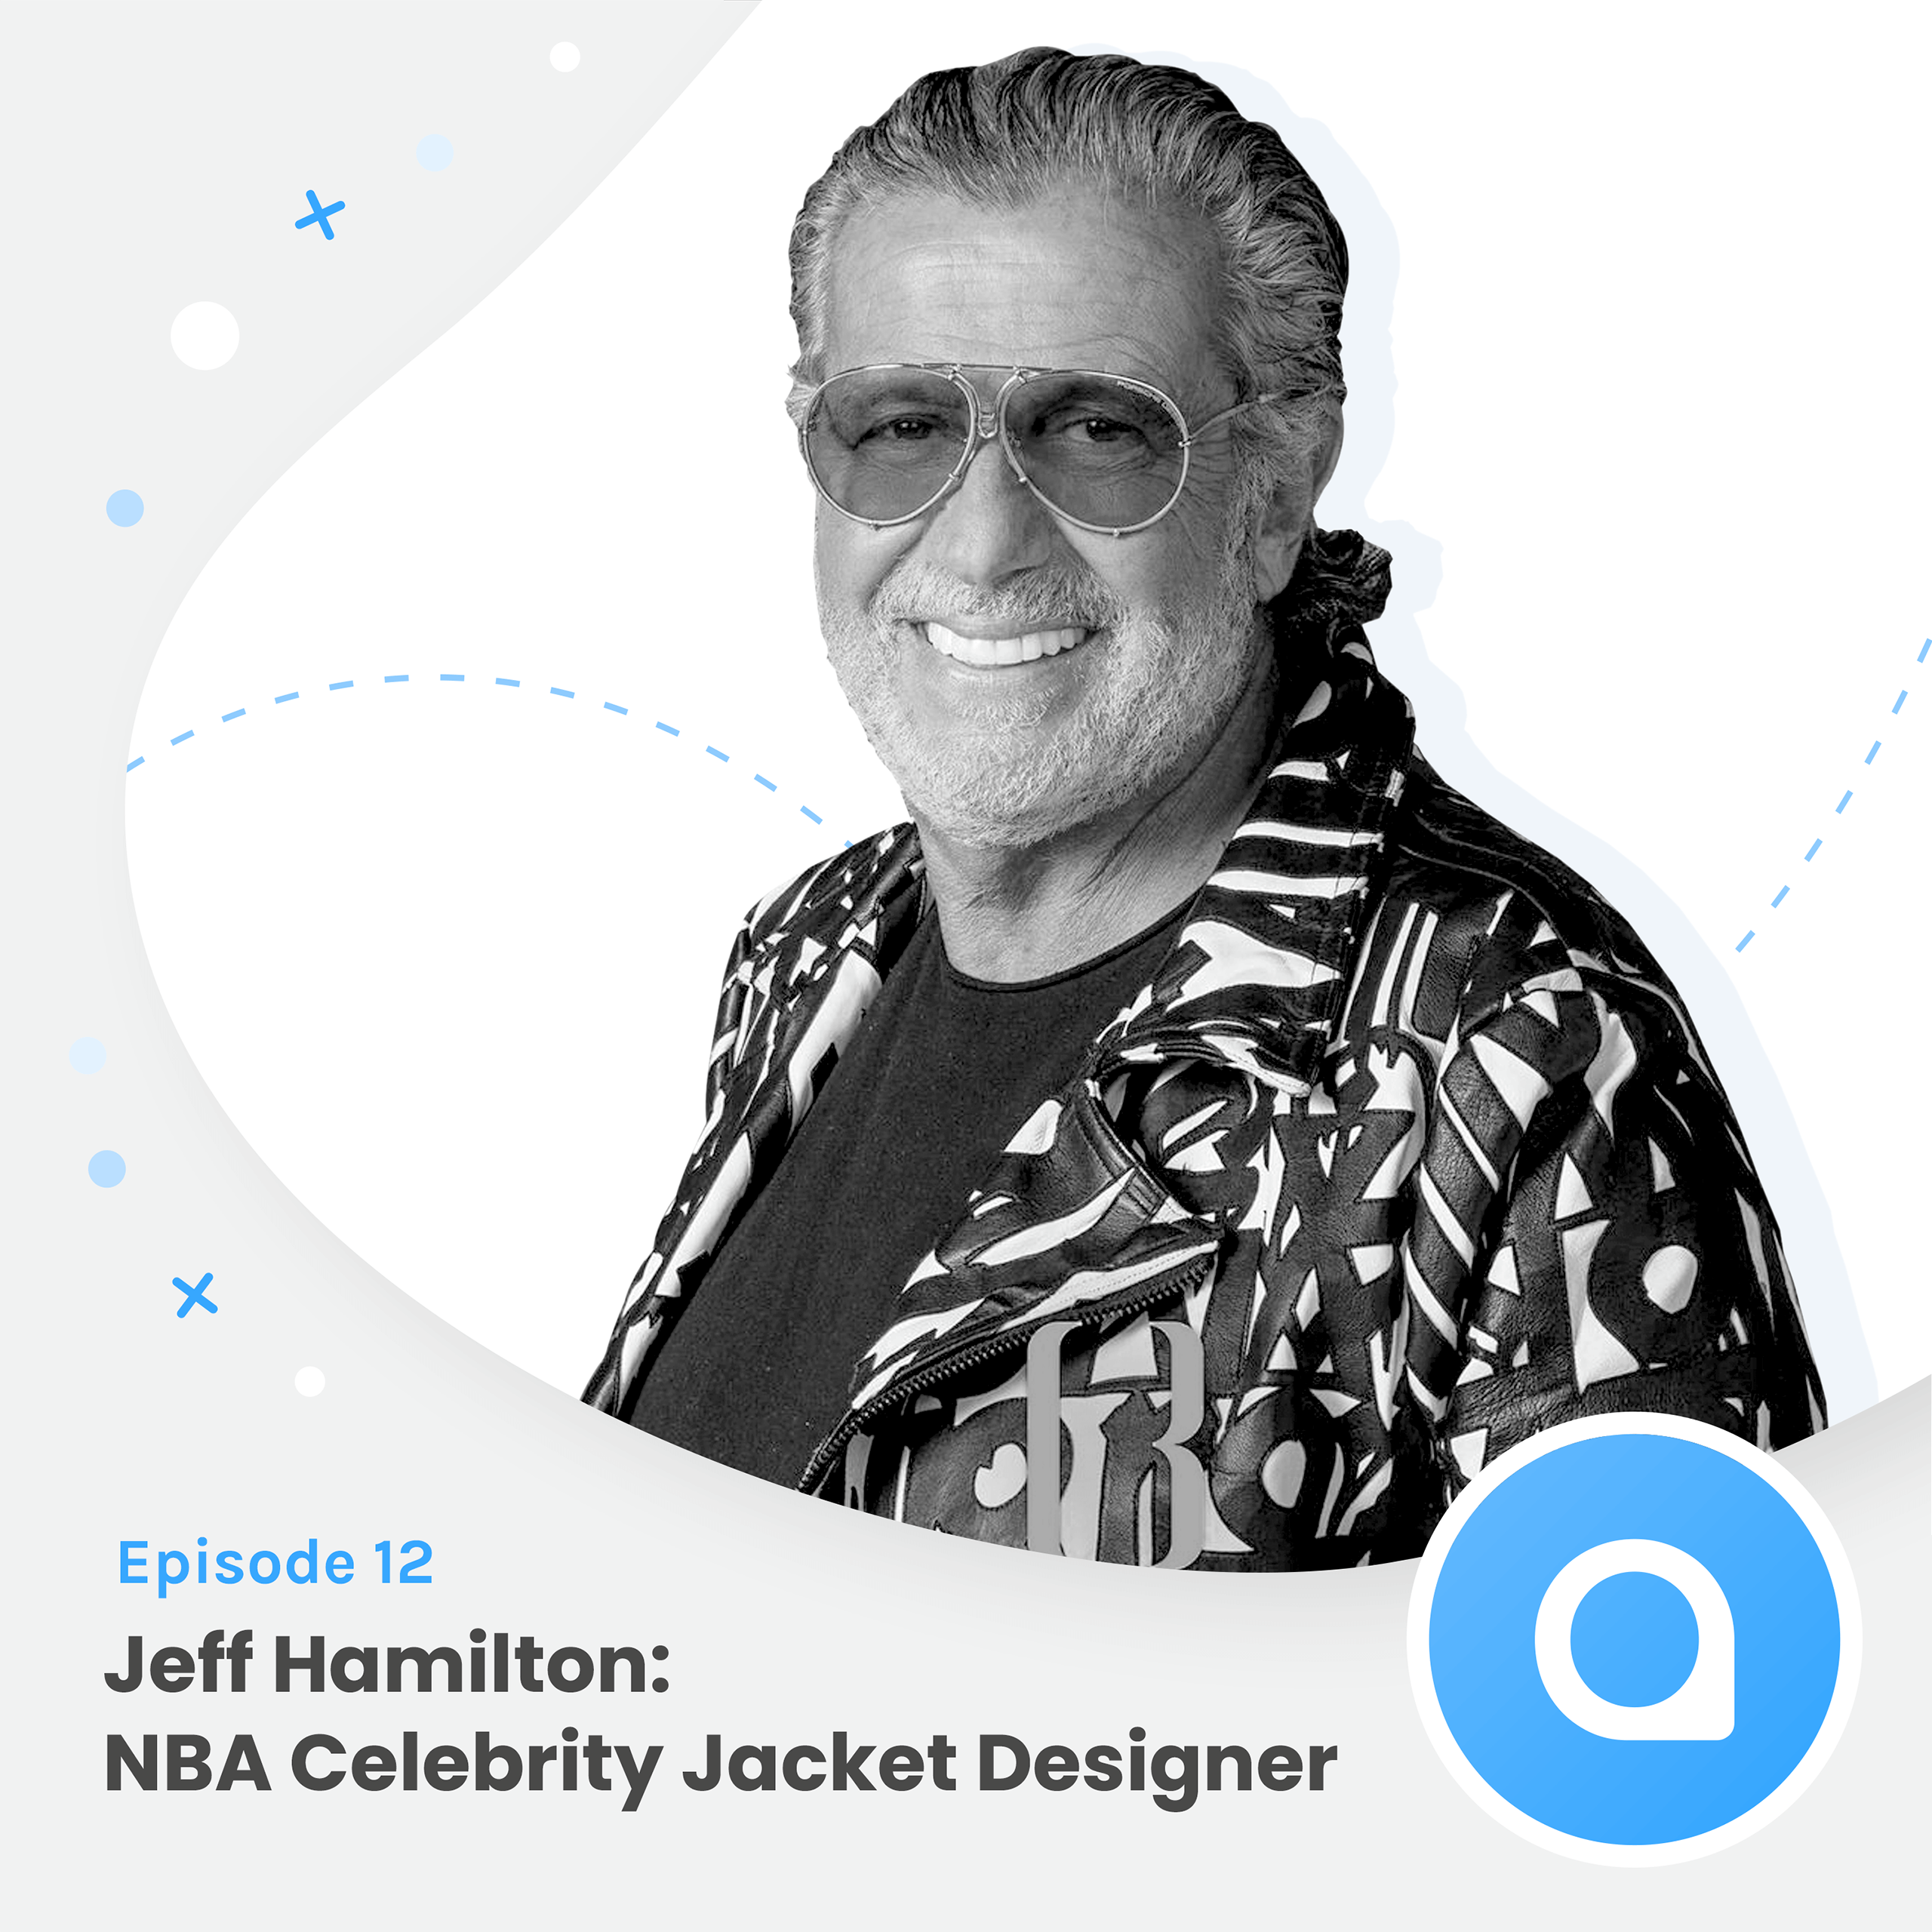 Jeff Hamilton: NBA Celebrity Jacket Designer